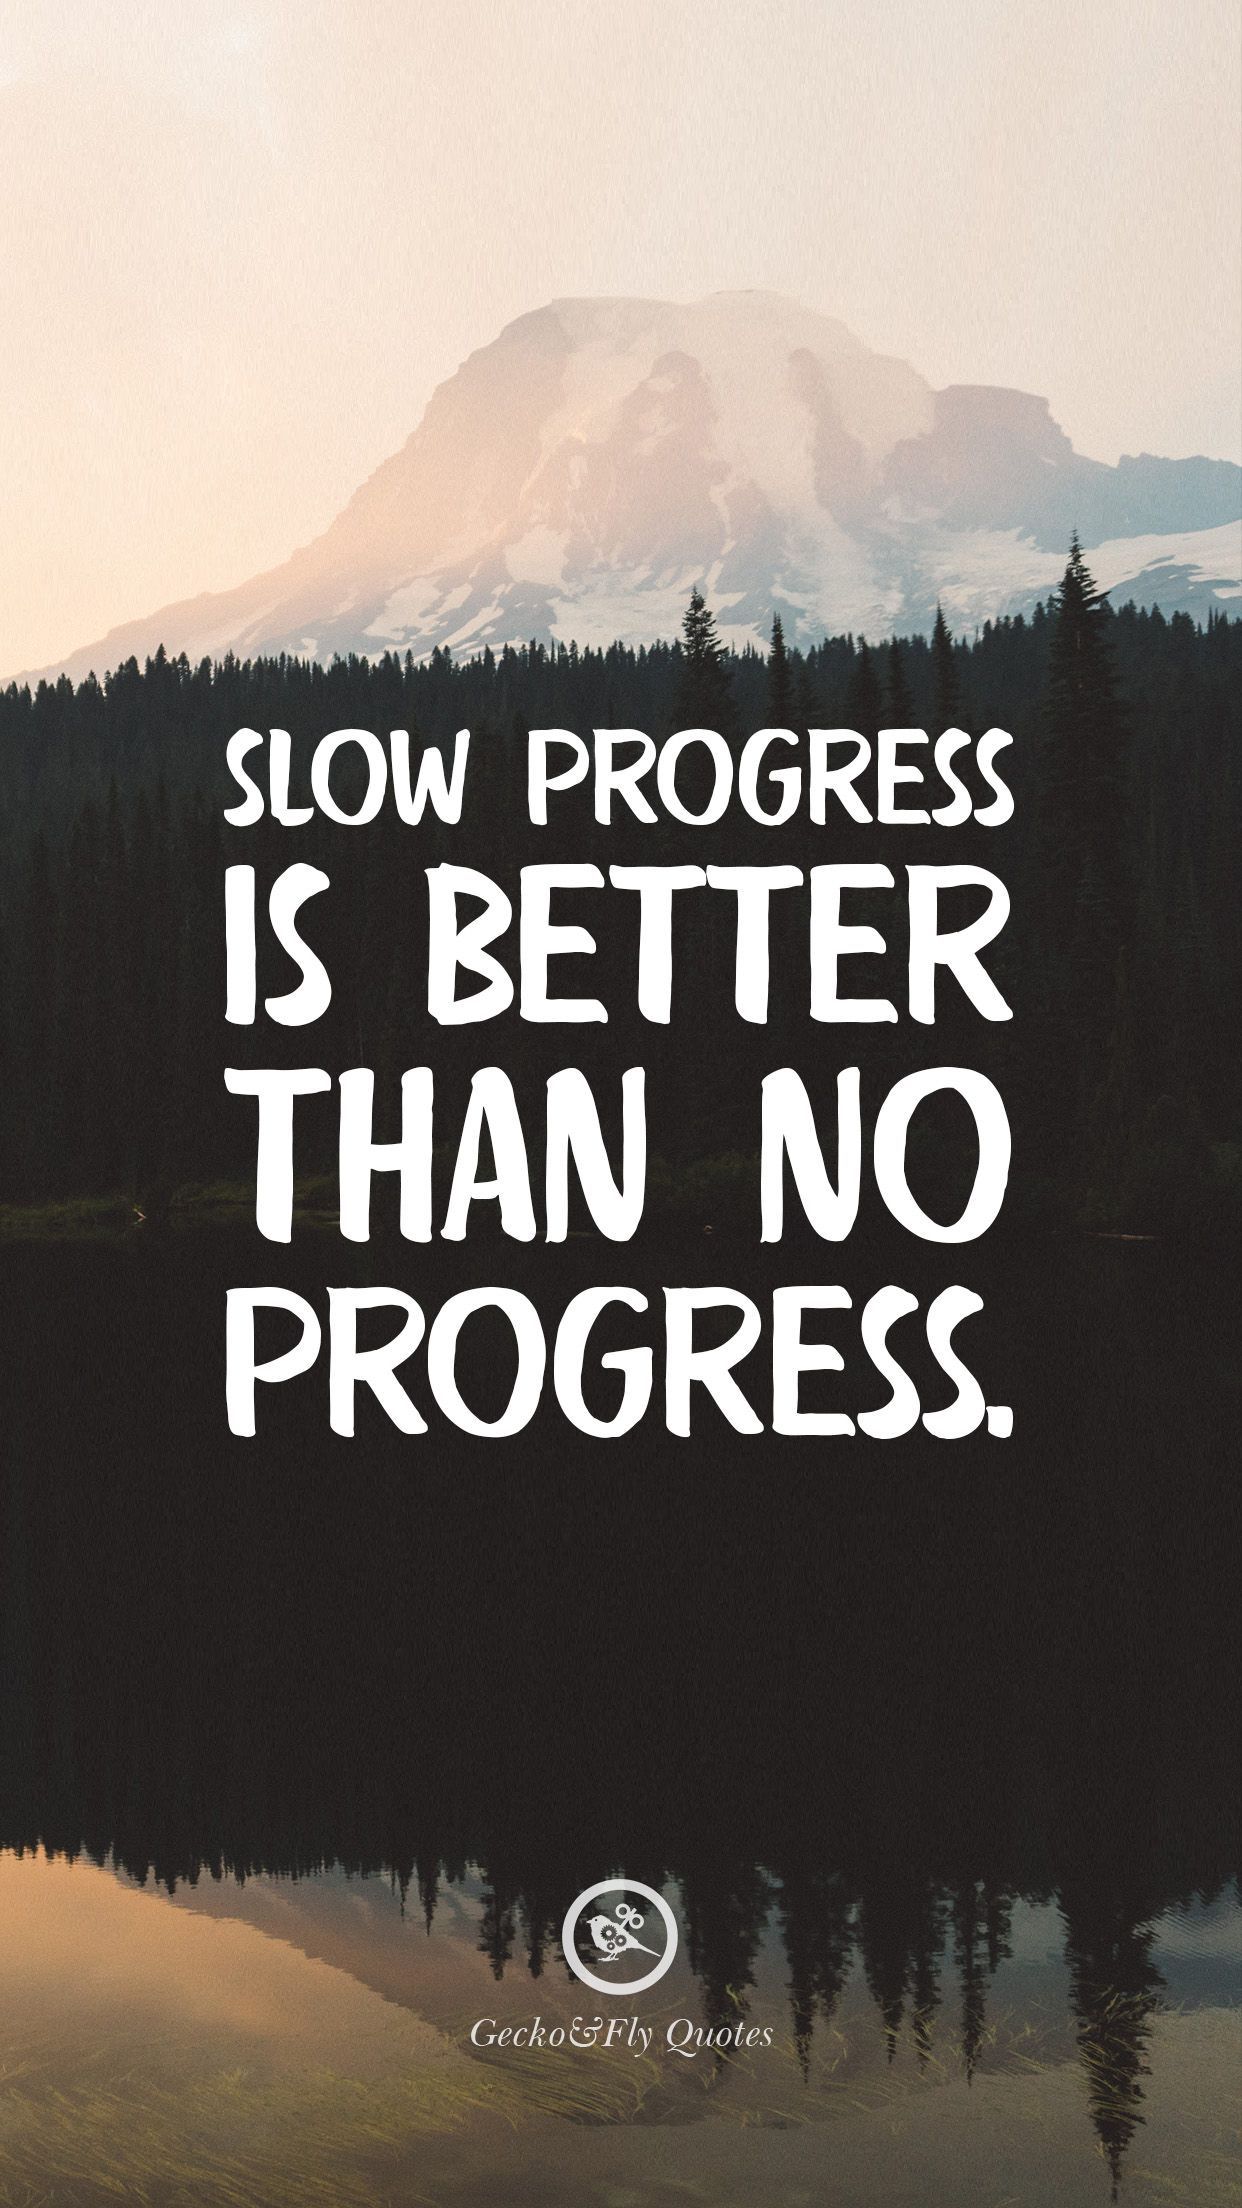 strive for progress not perfection wallpaper